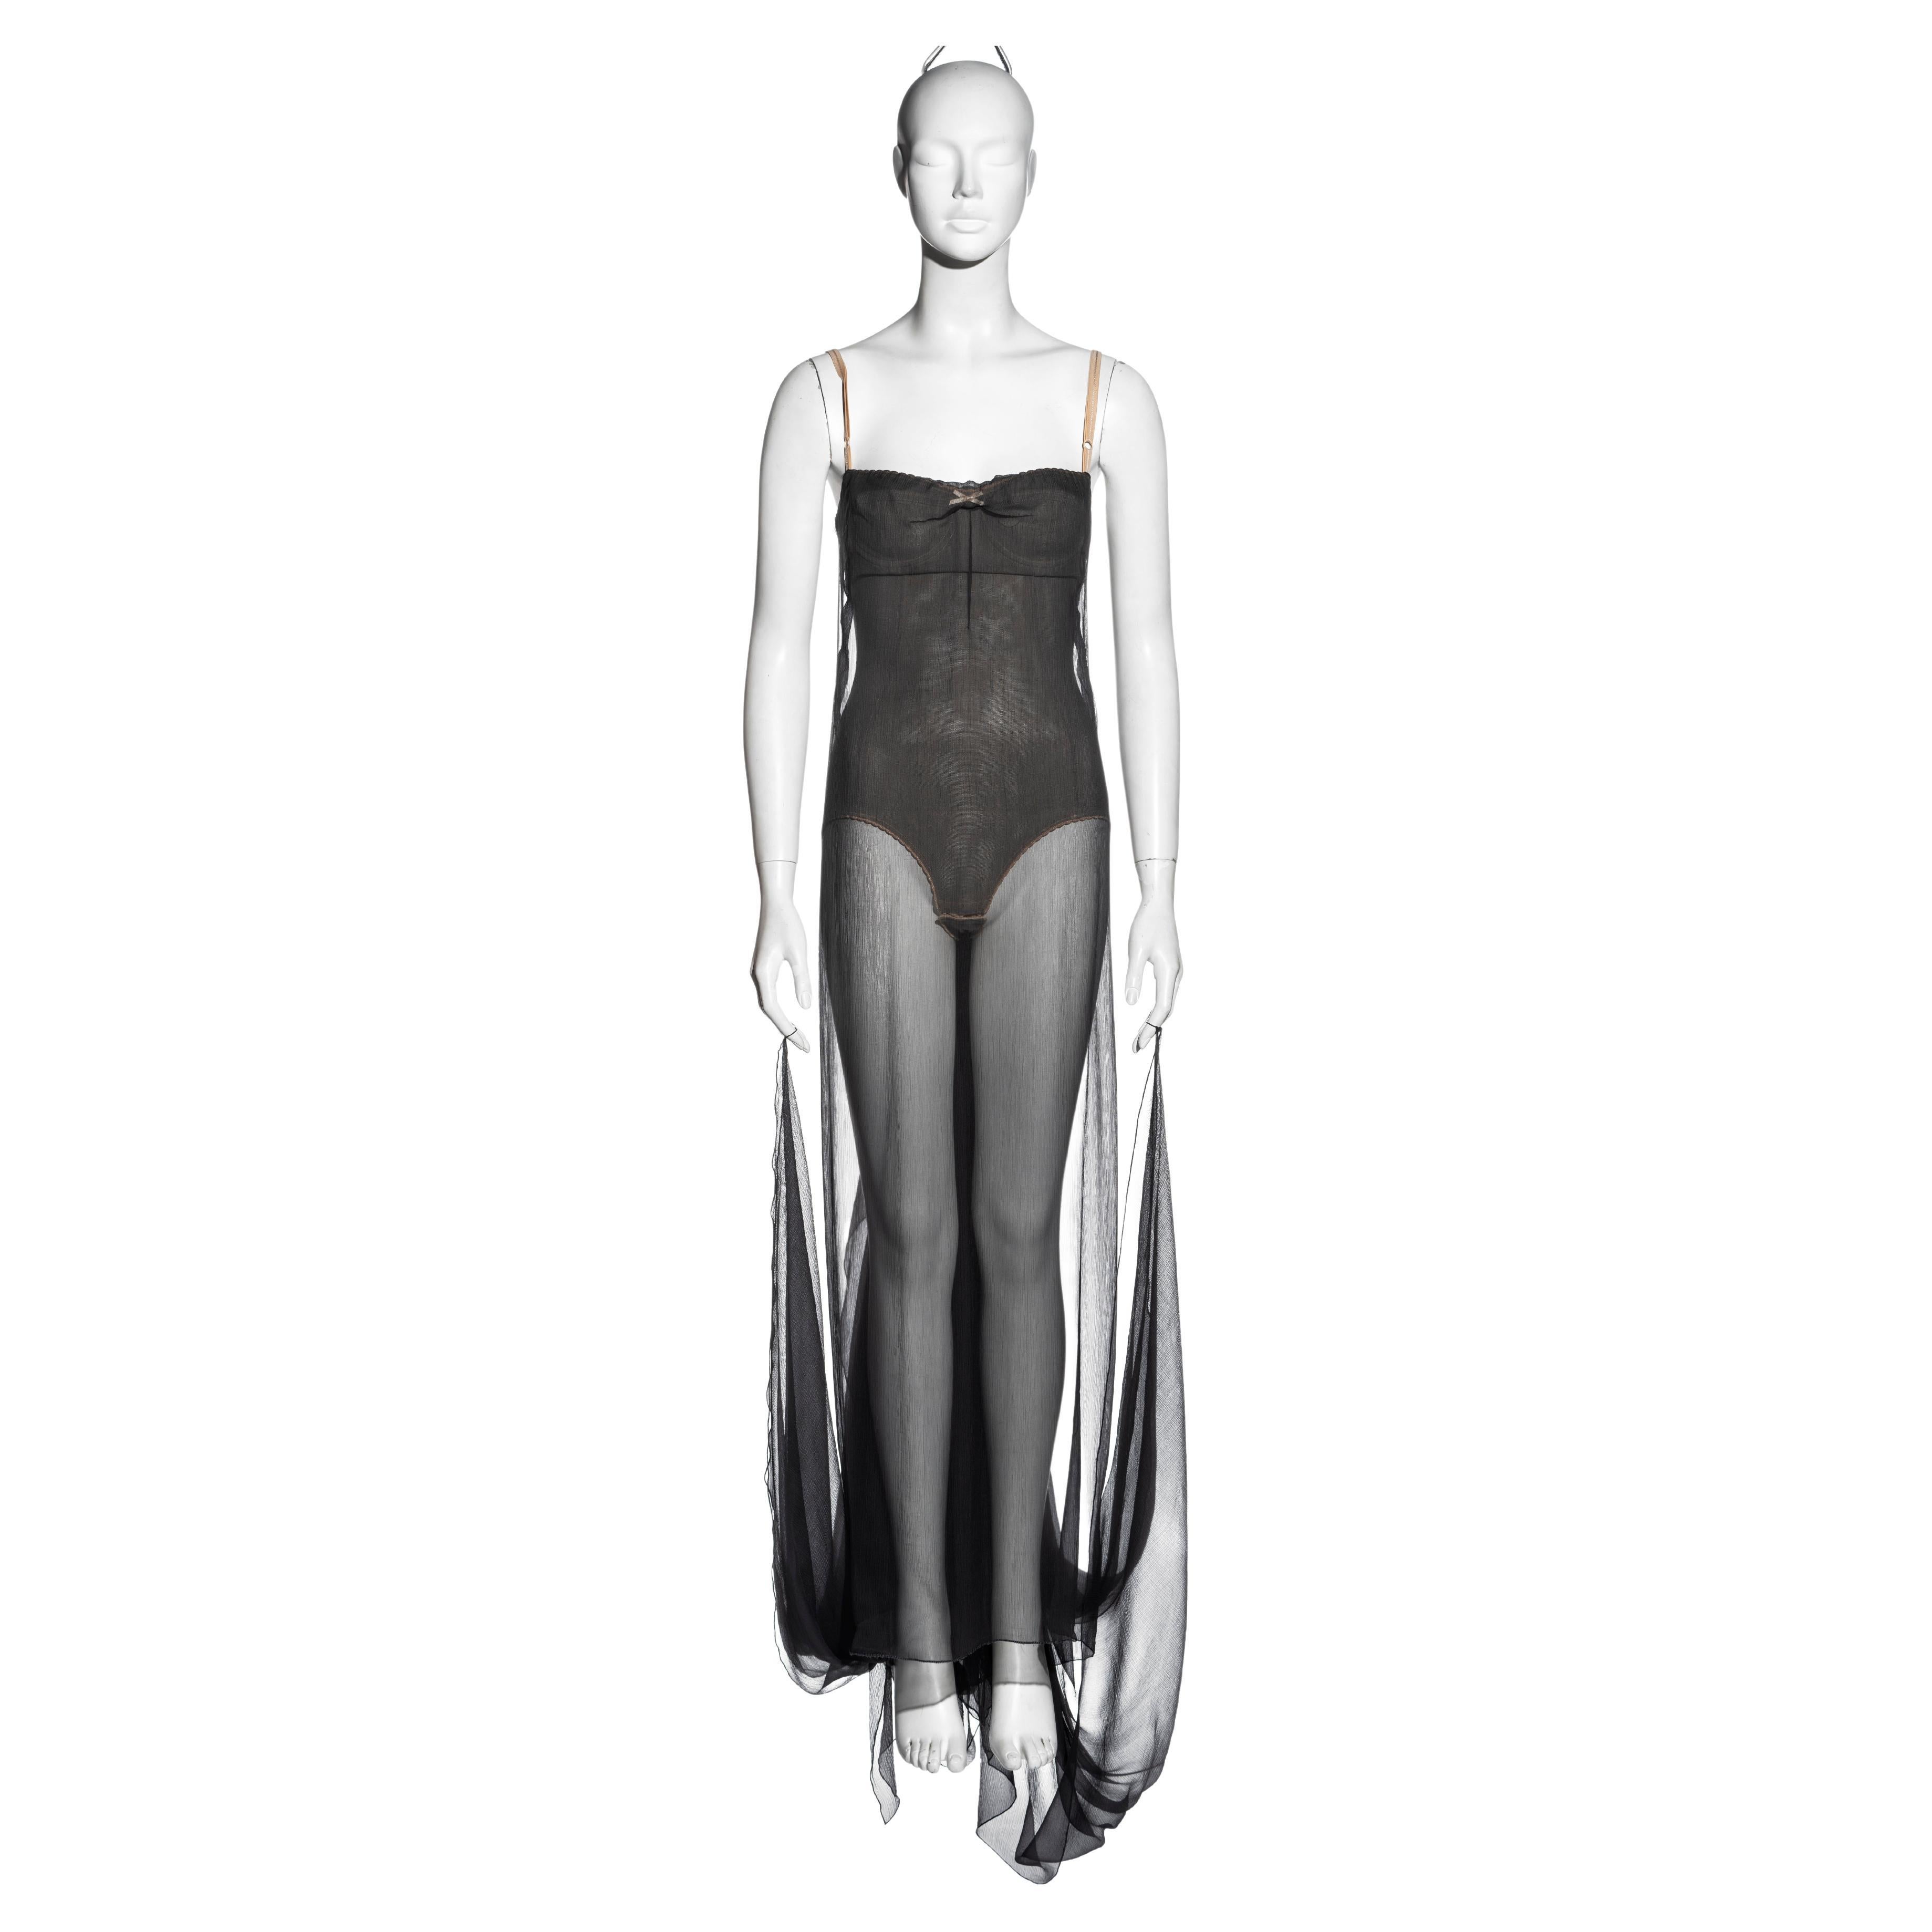 Dolce & Gabbana grey silk chiffon evening dress with built-in bodysuit, ss 1999